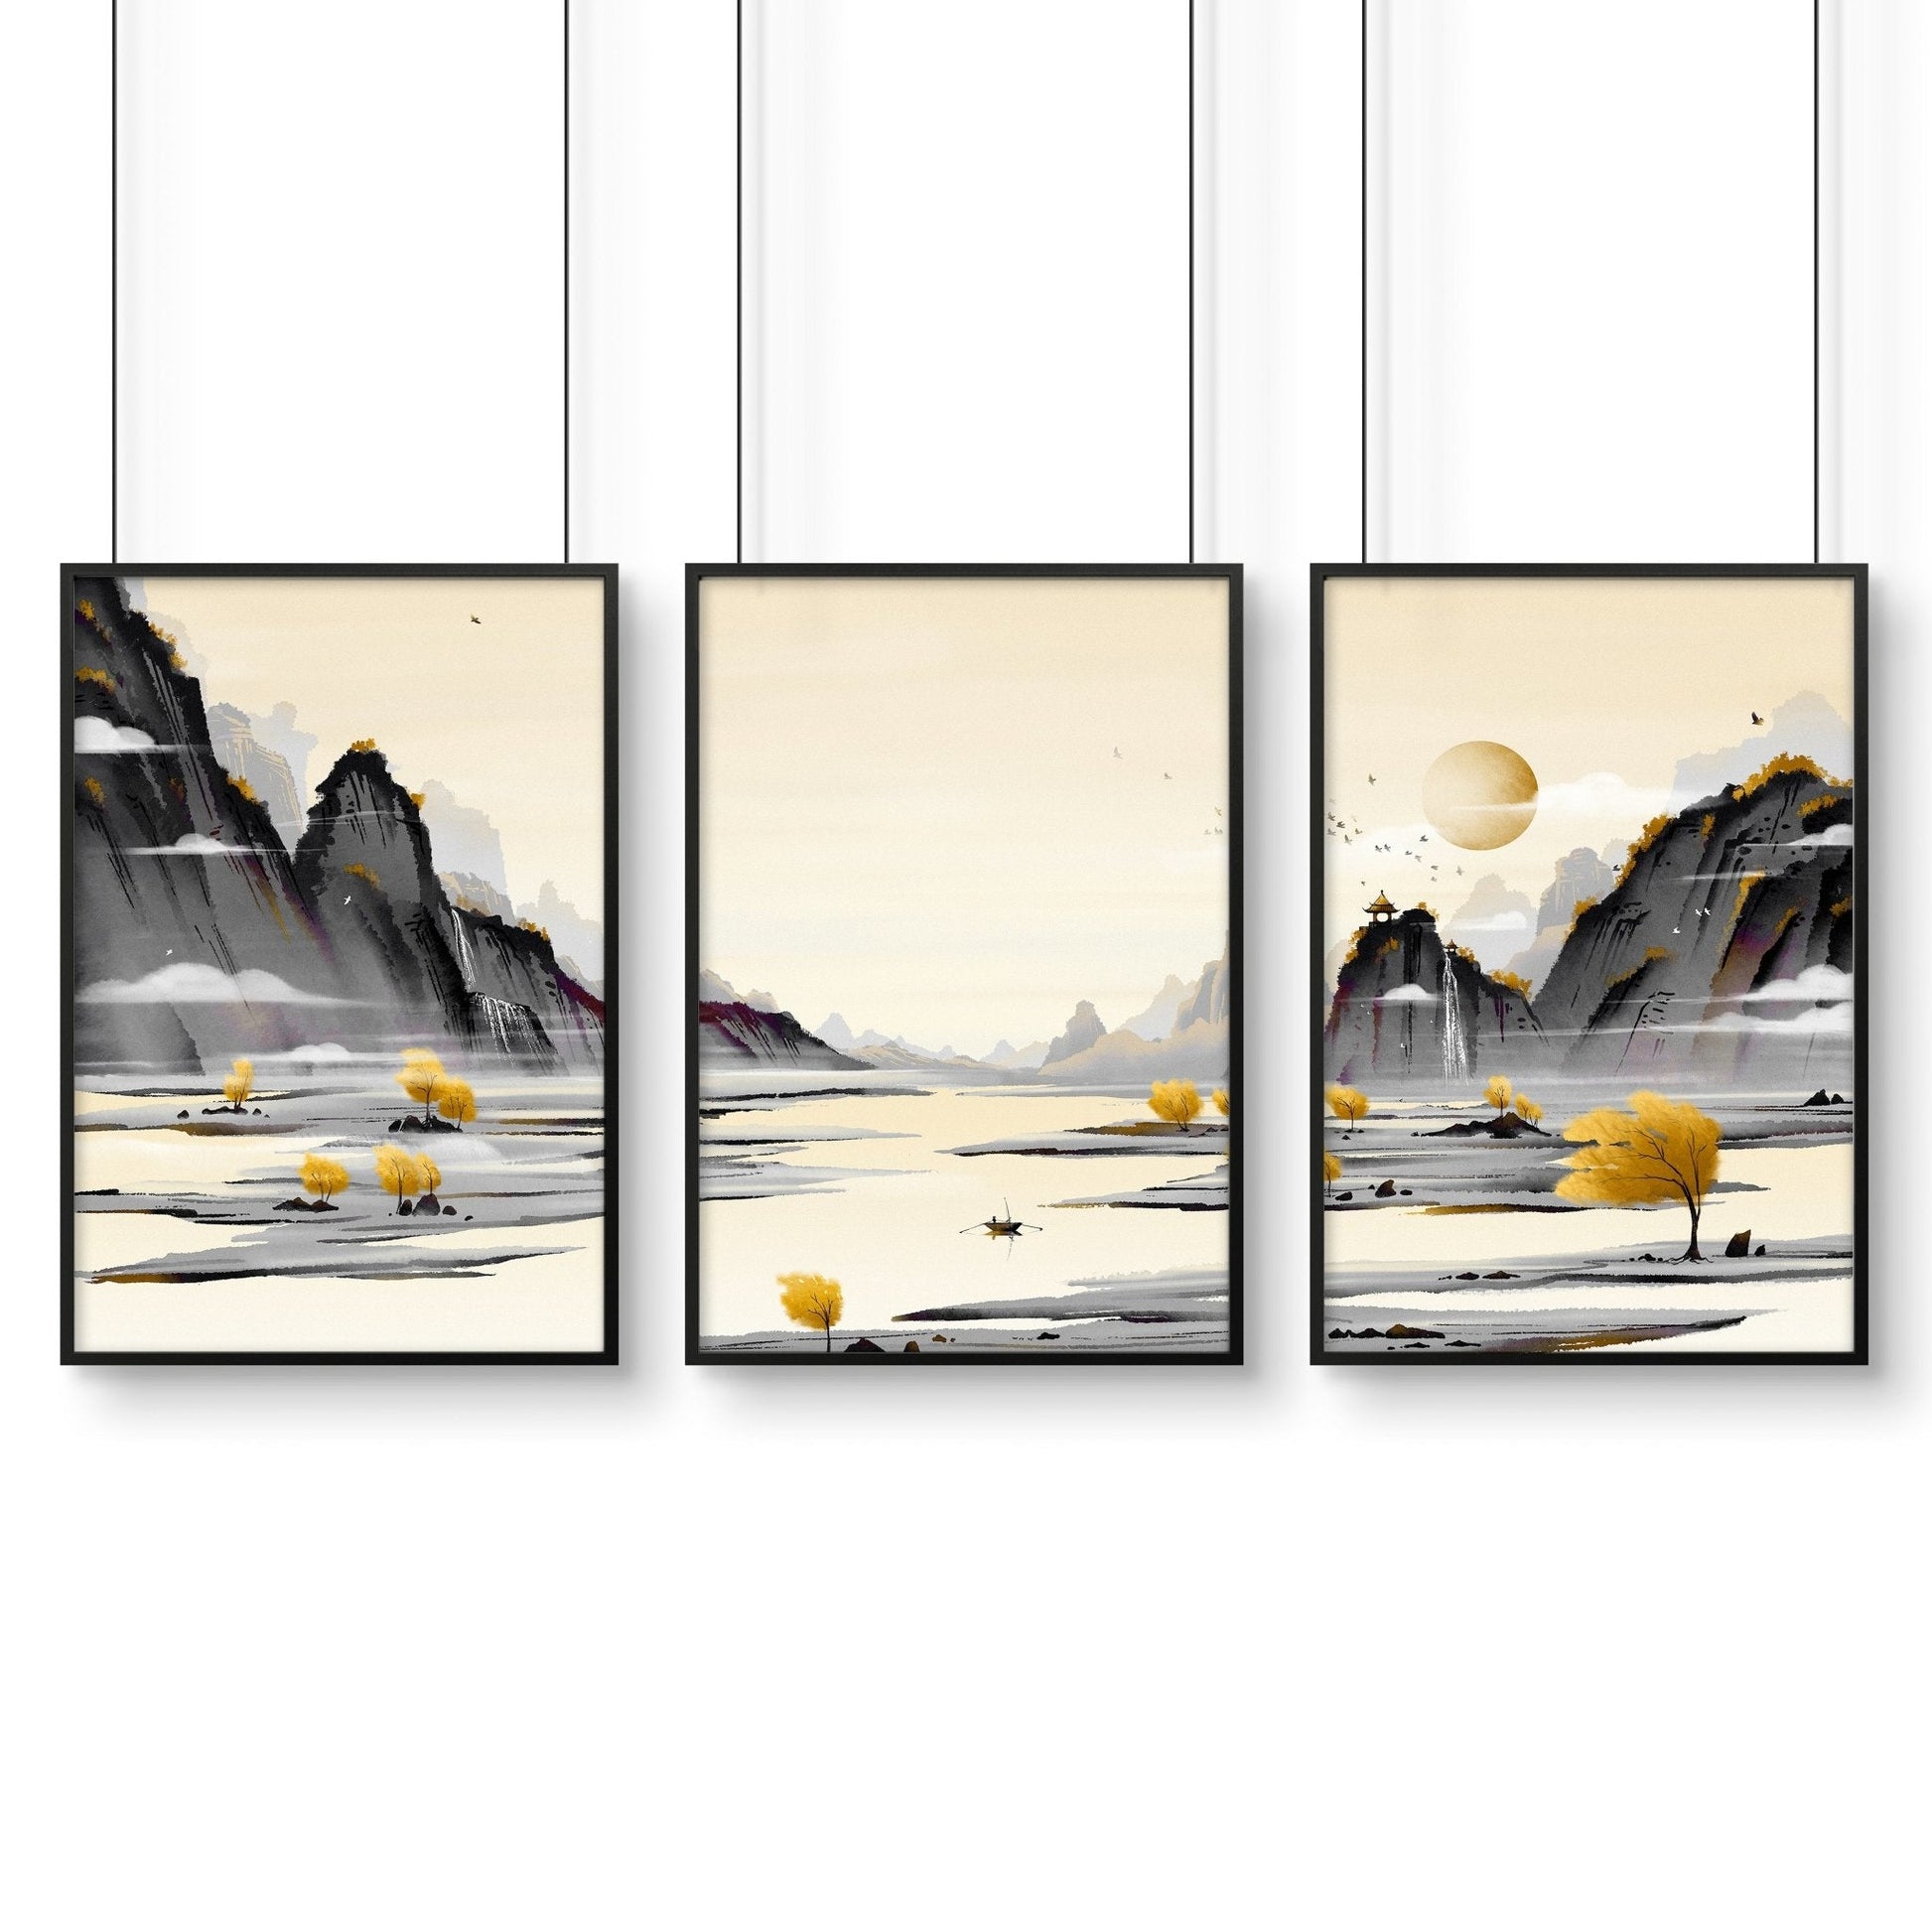 Japanese Landscape Painting art | set of 3 wall art prints - About Wall Art